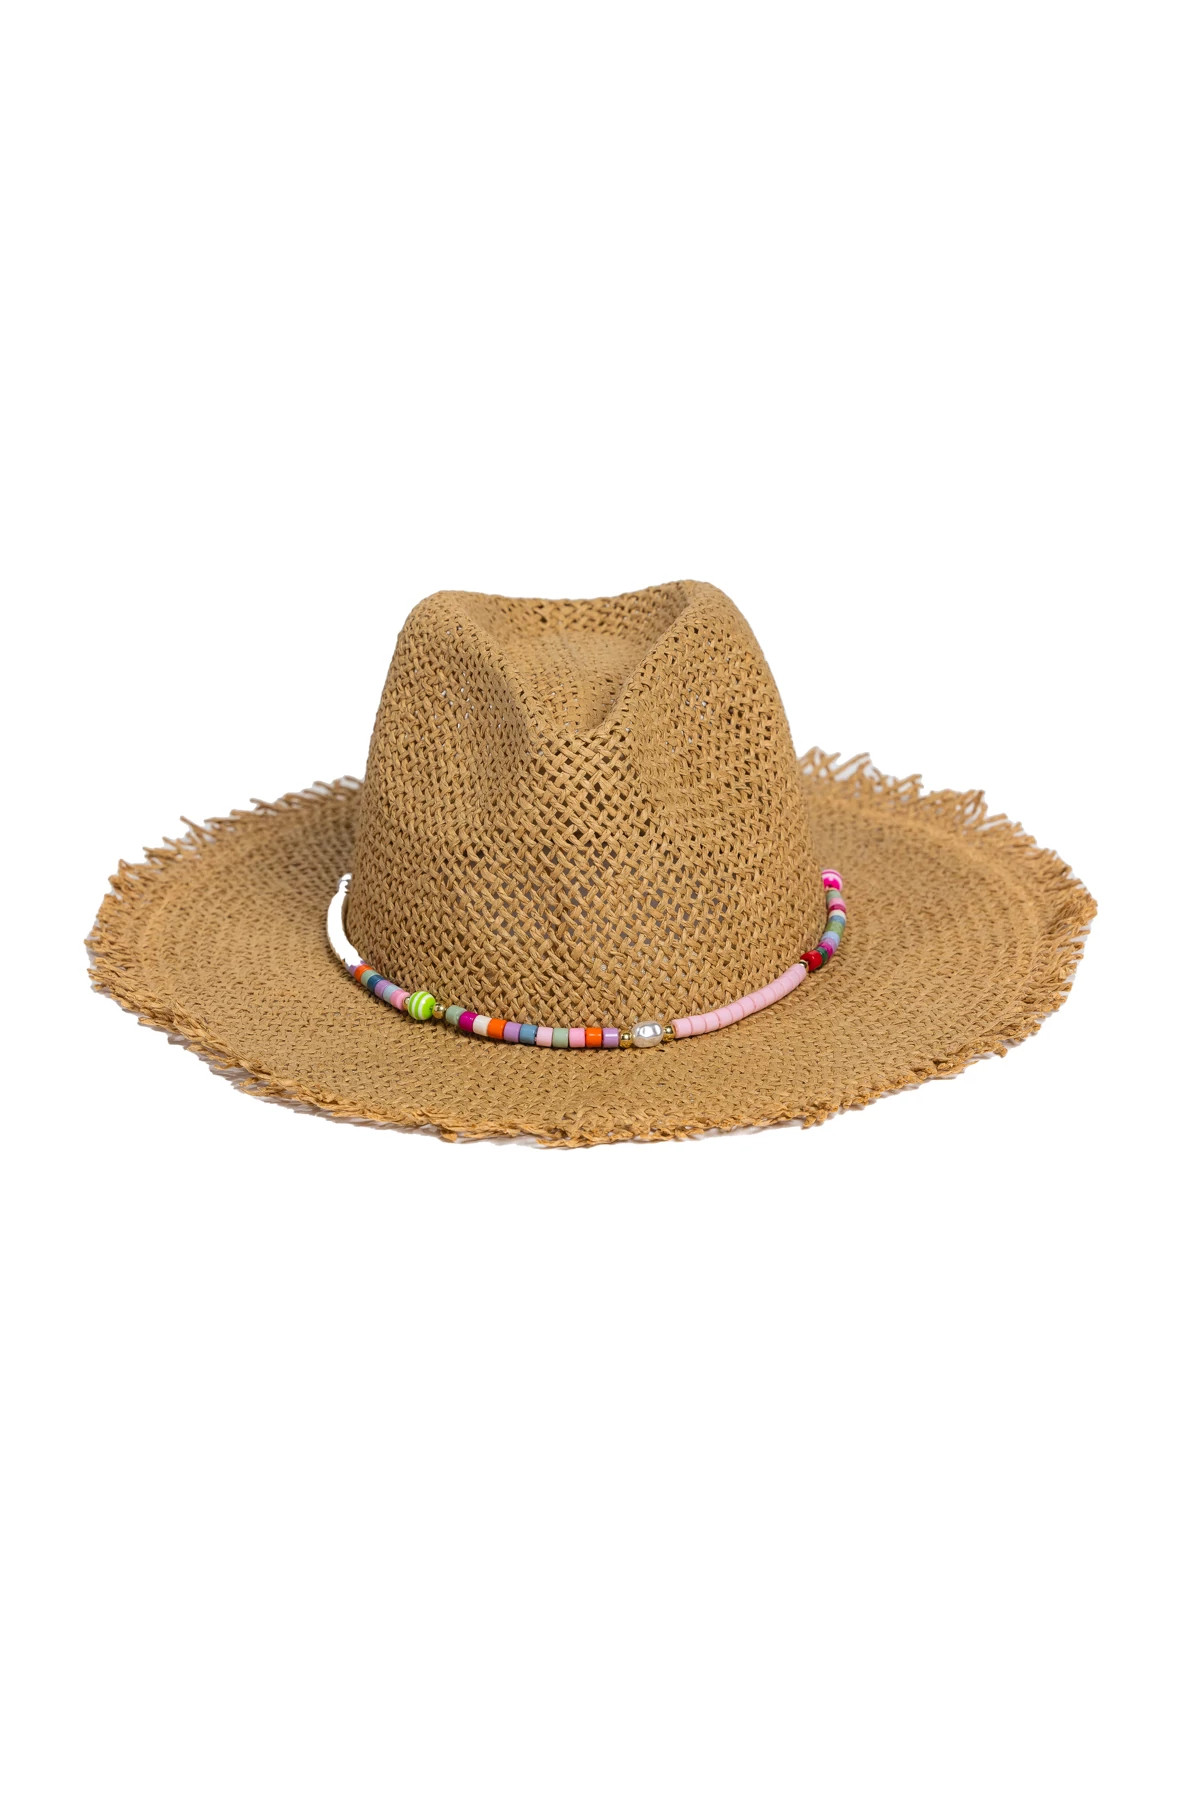 LT TOAST Jewel Rancher Panama Hat image number 1